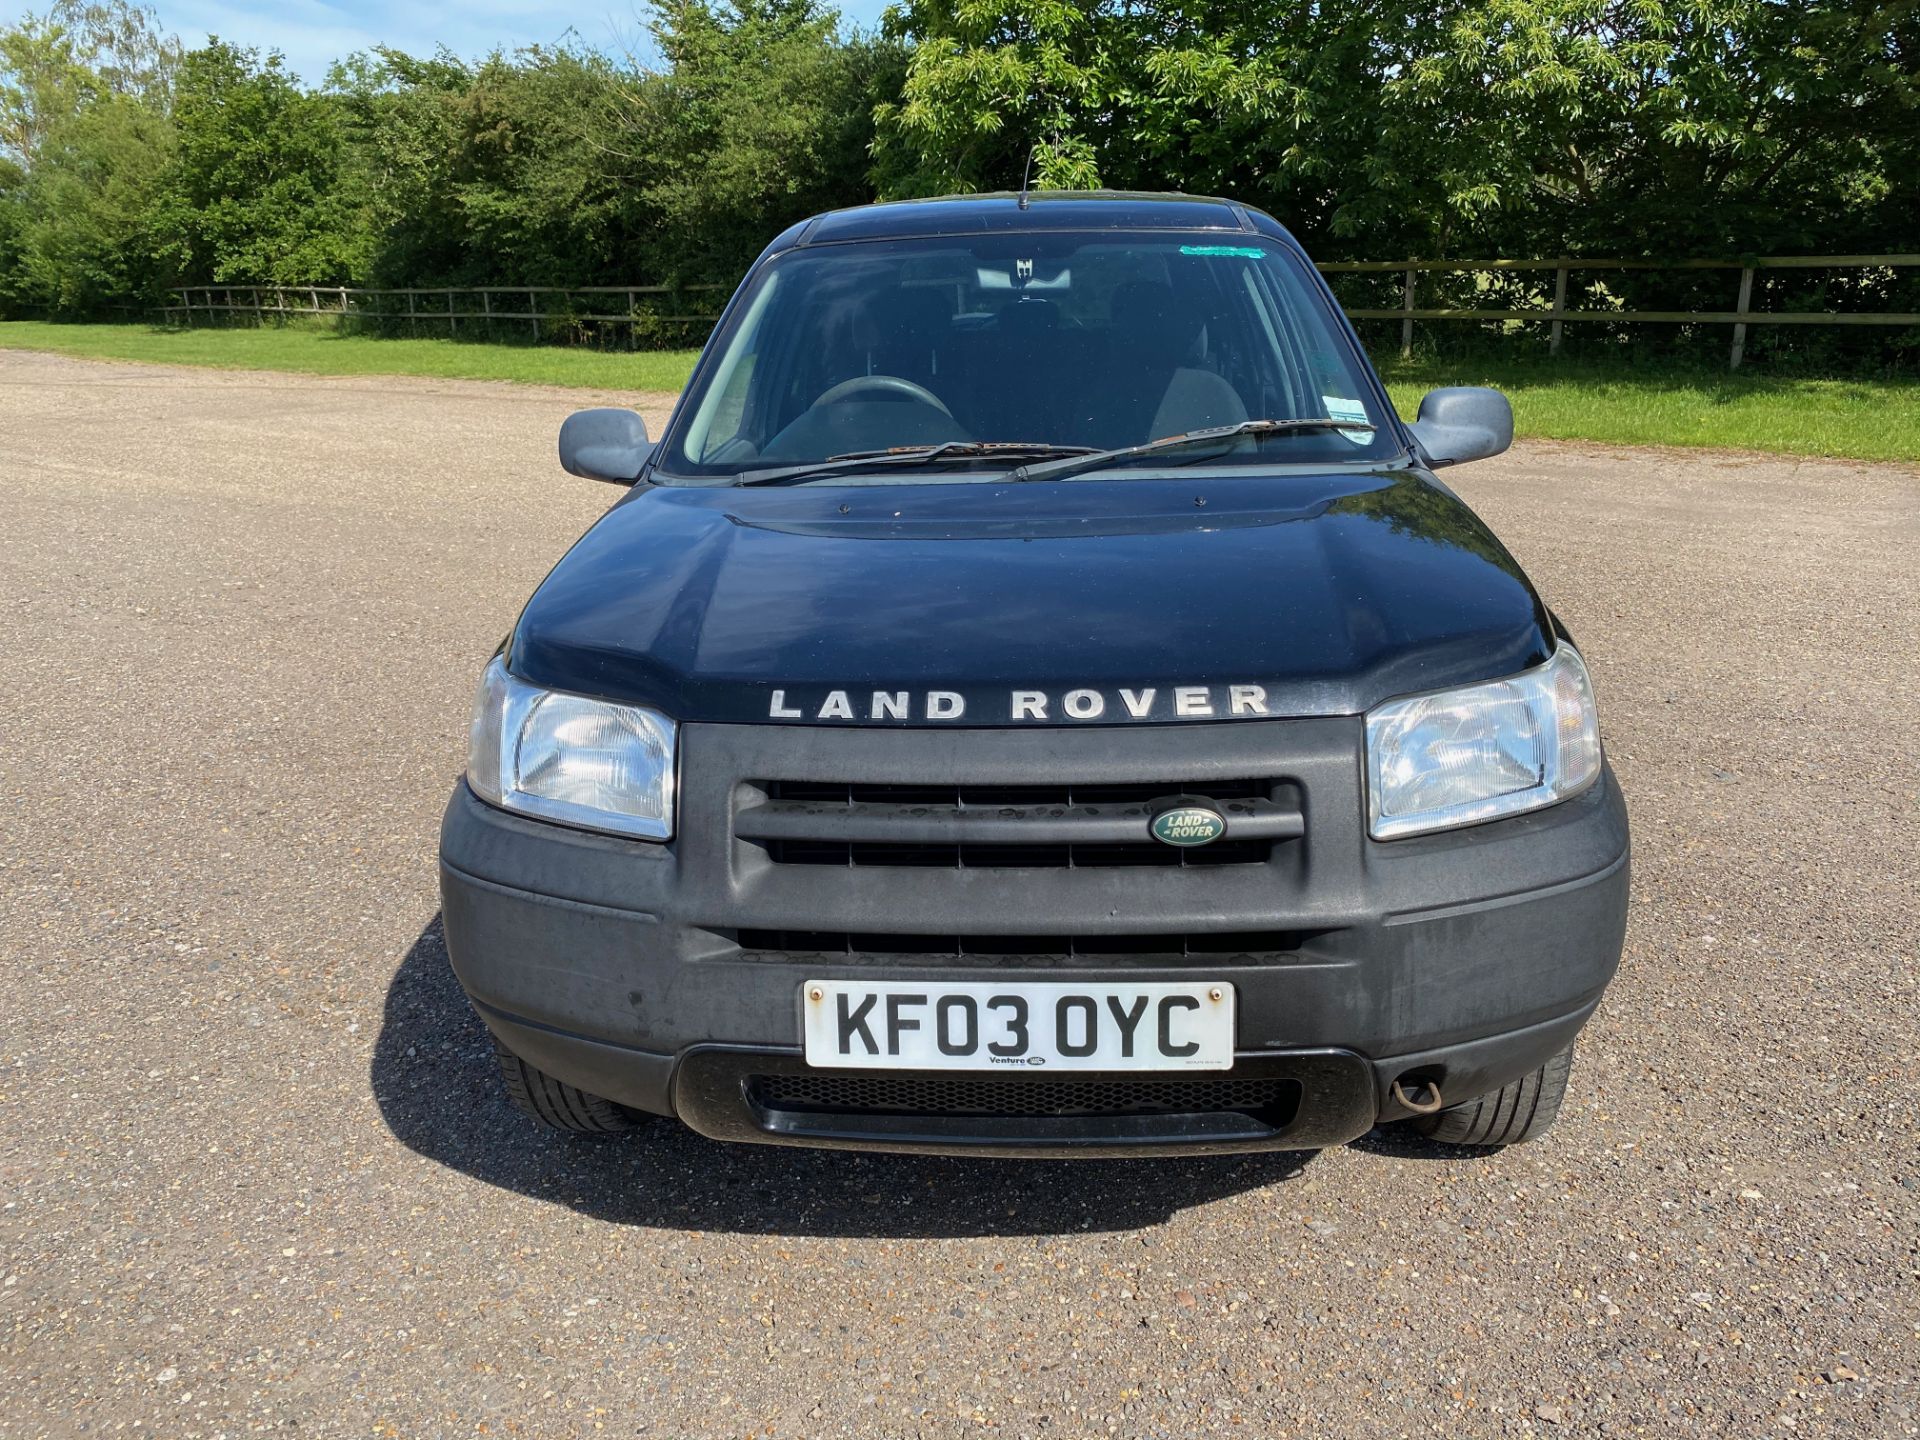 **UPDATE MILEAGE** Land Rover Freelander 1 TD4 diesel. Registration KF03 OYC. Date of first - Image 8 of 14